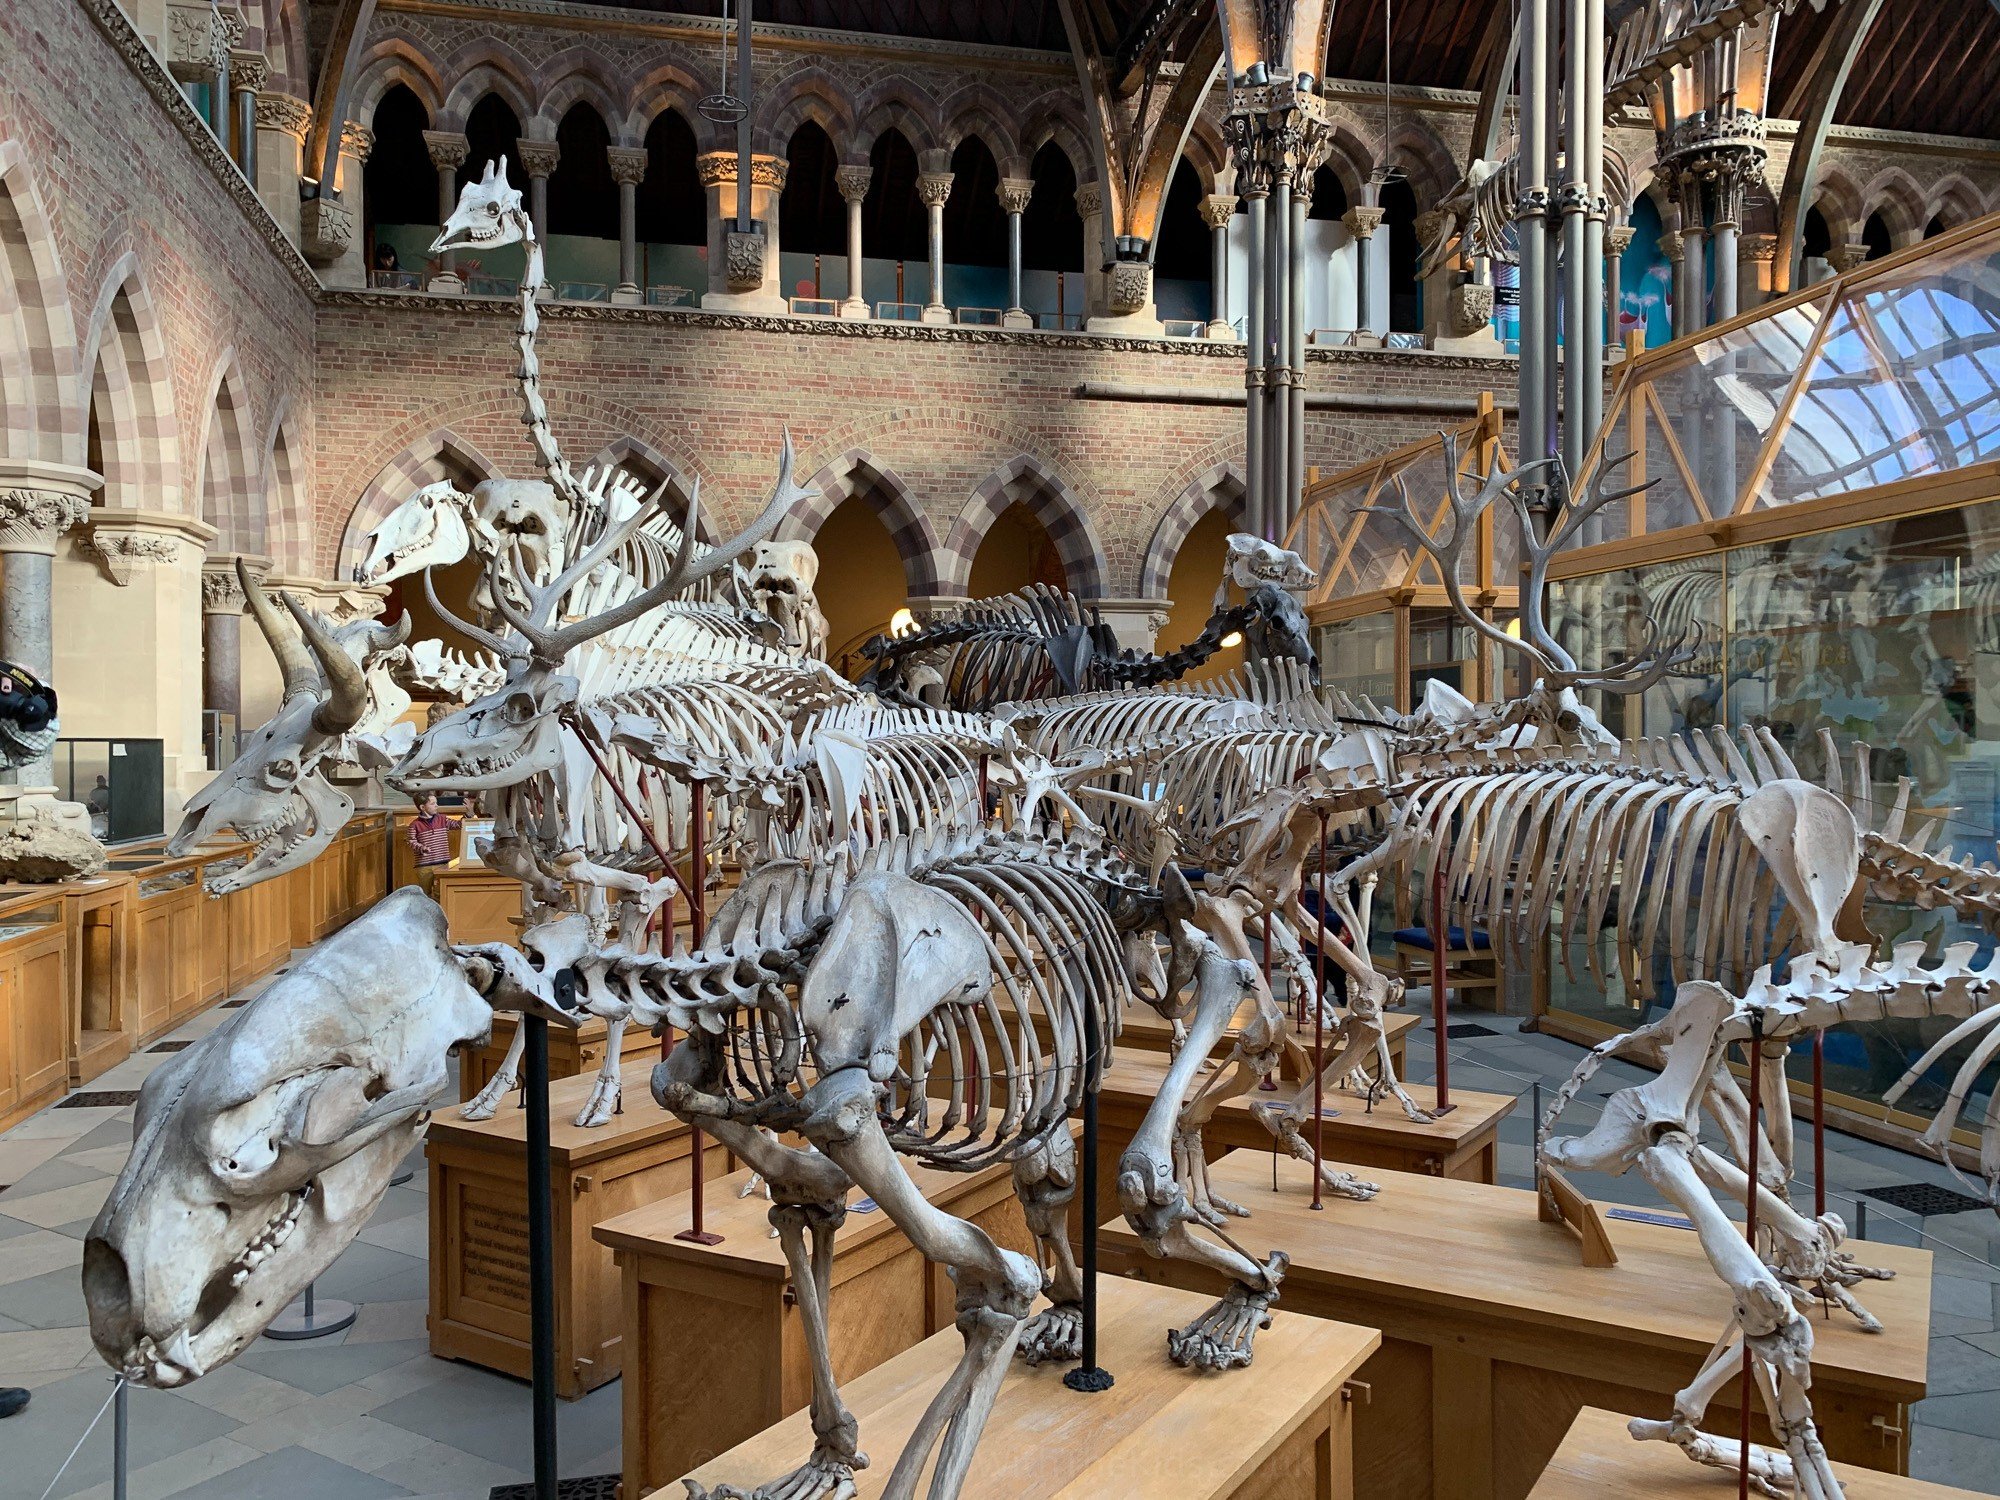 Exhibit of different animal skeletons